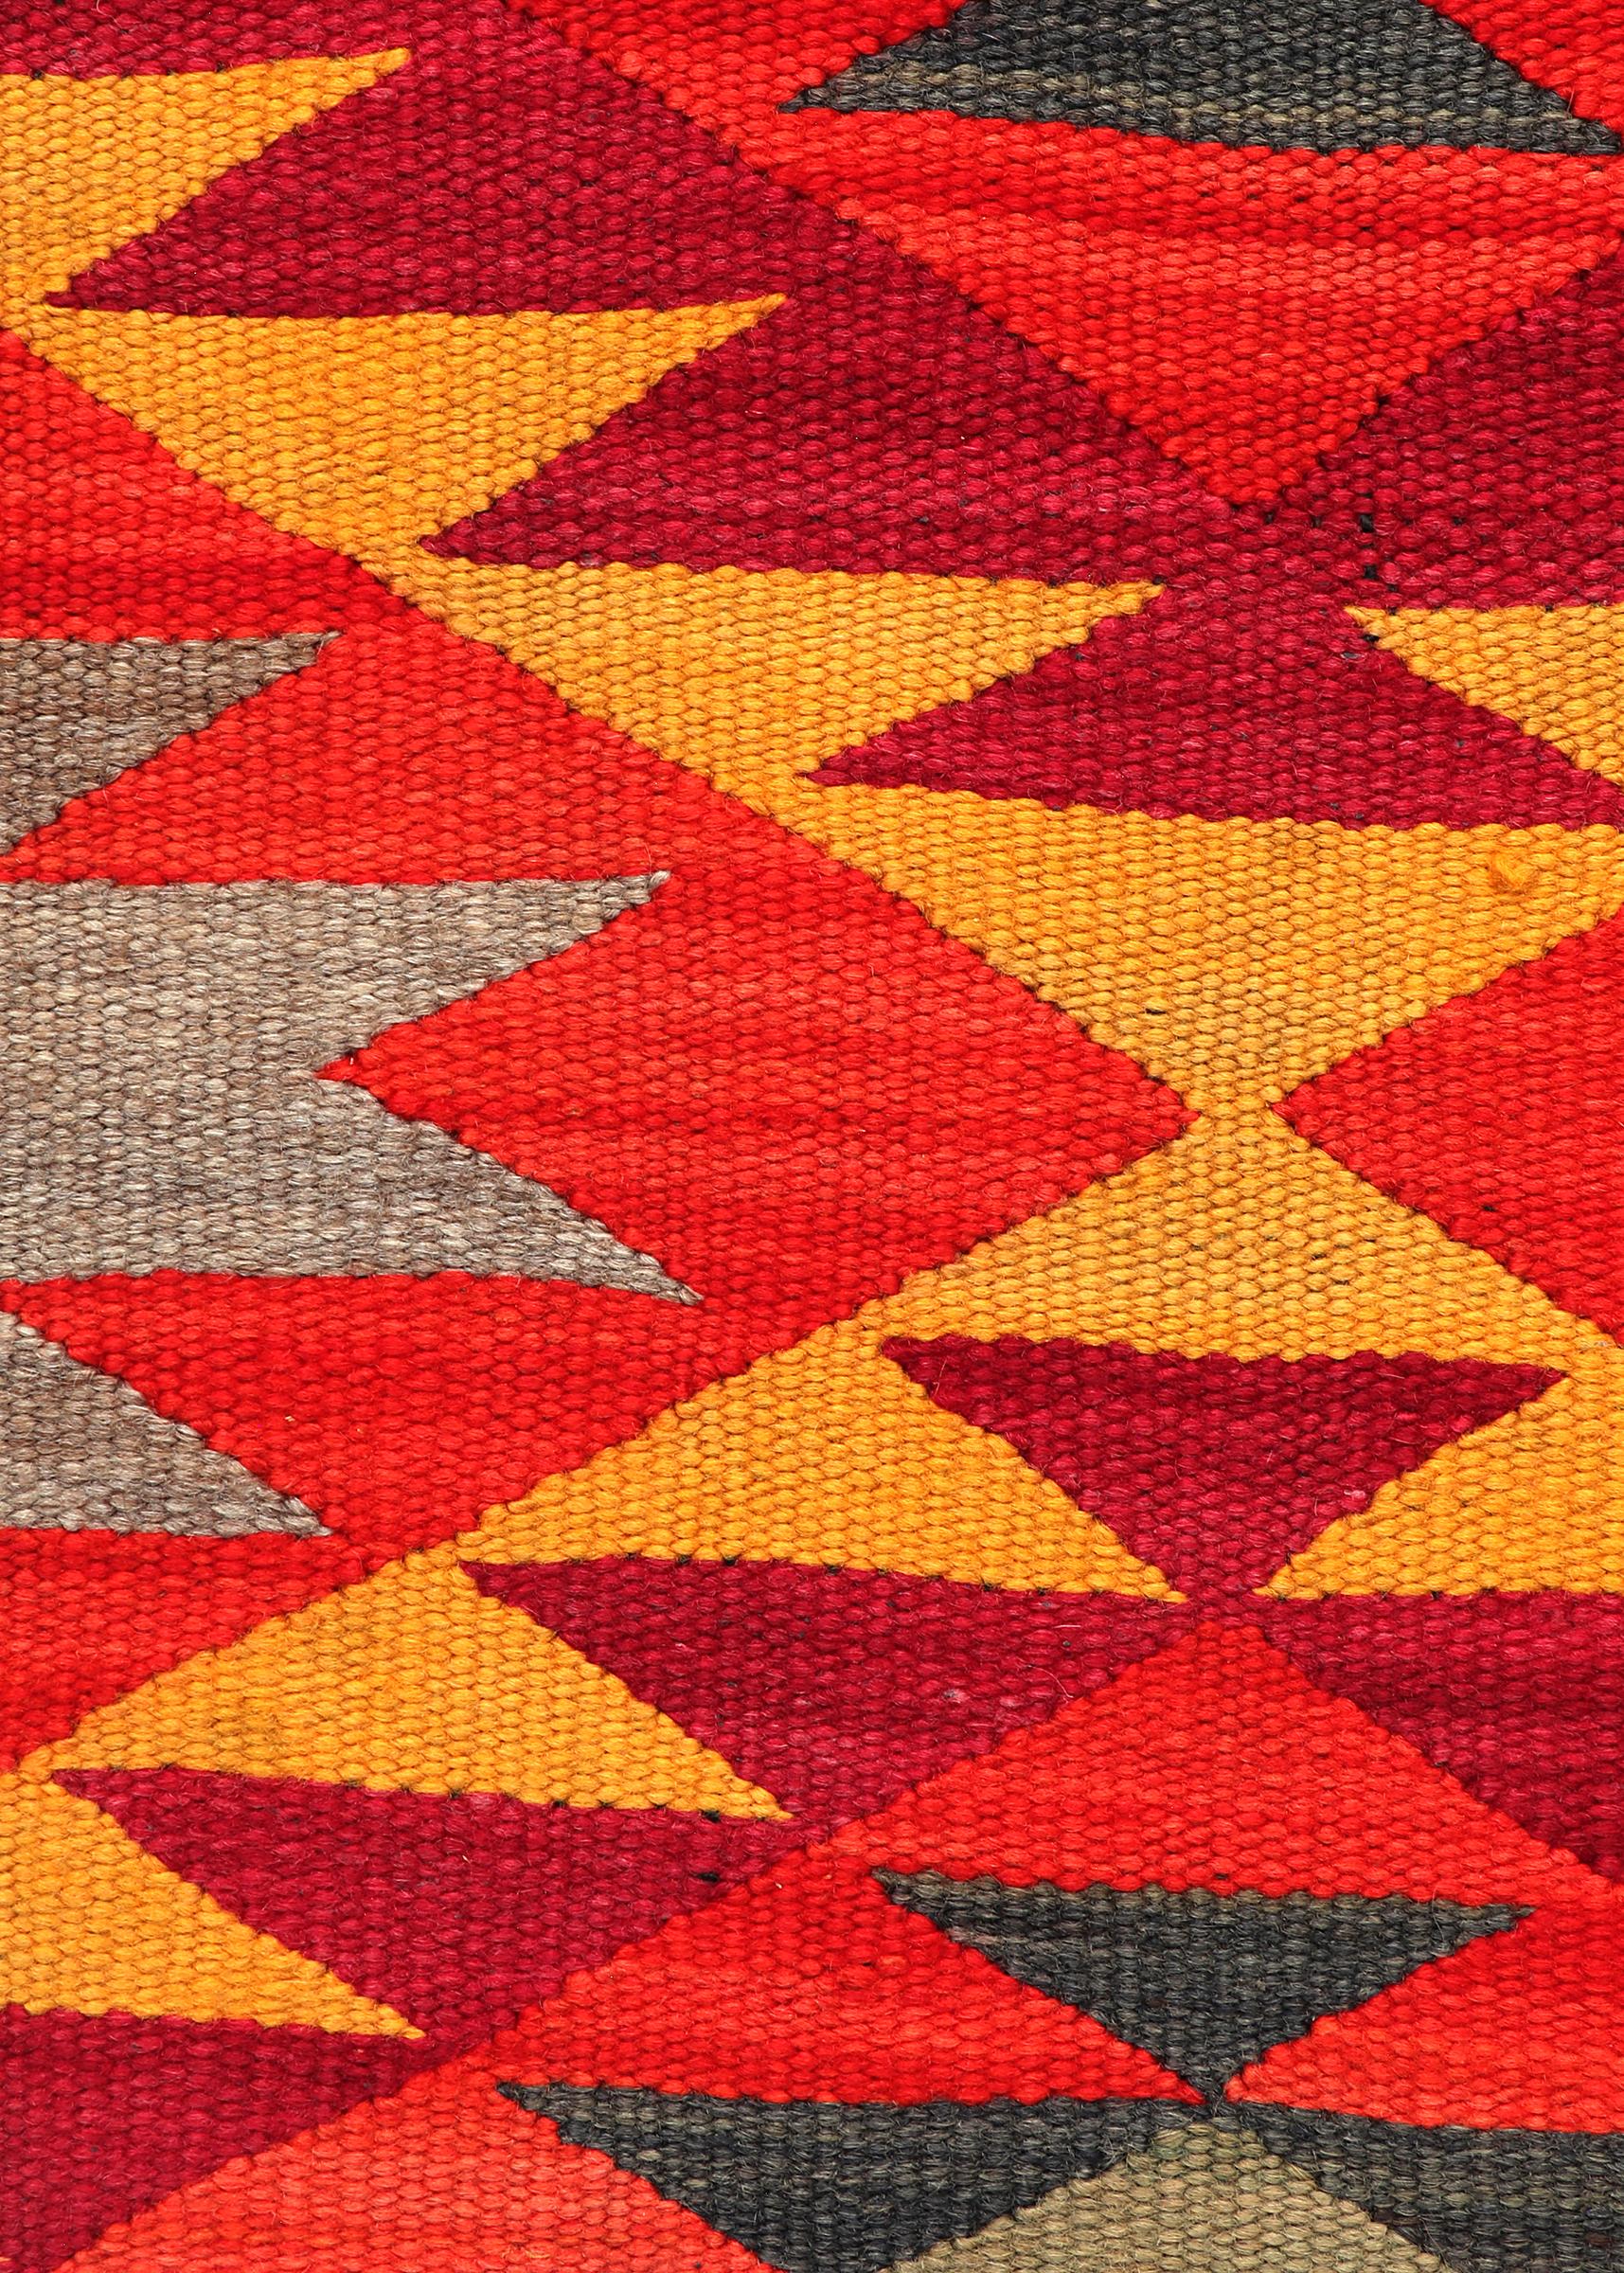 American 1885 Navajo Weaving in Jewel Tones, Red, Yellow, Orange, and Brown